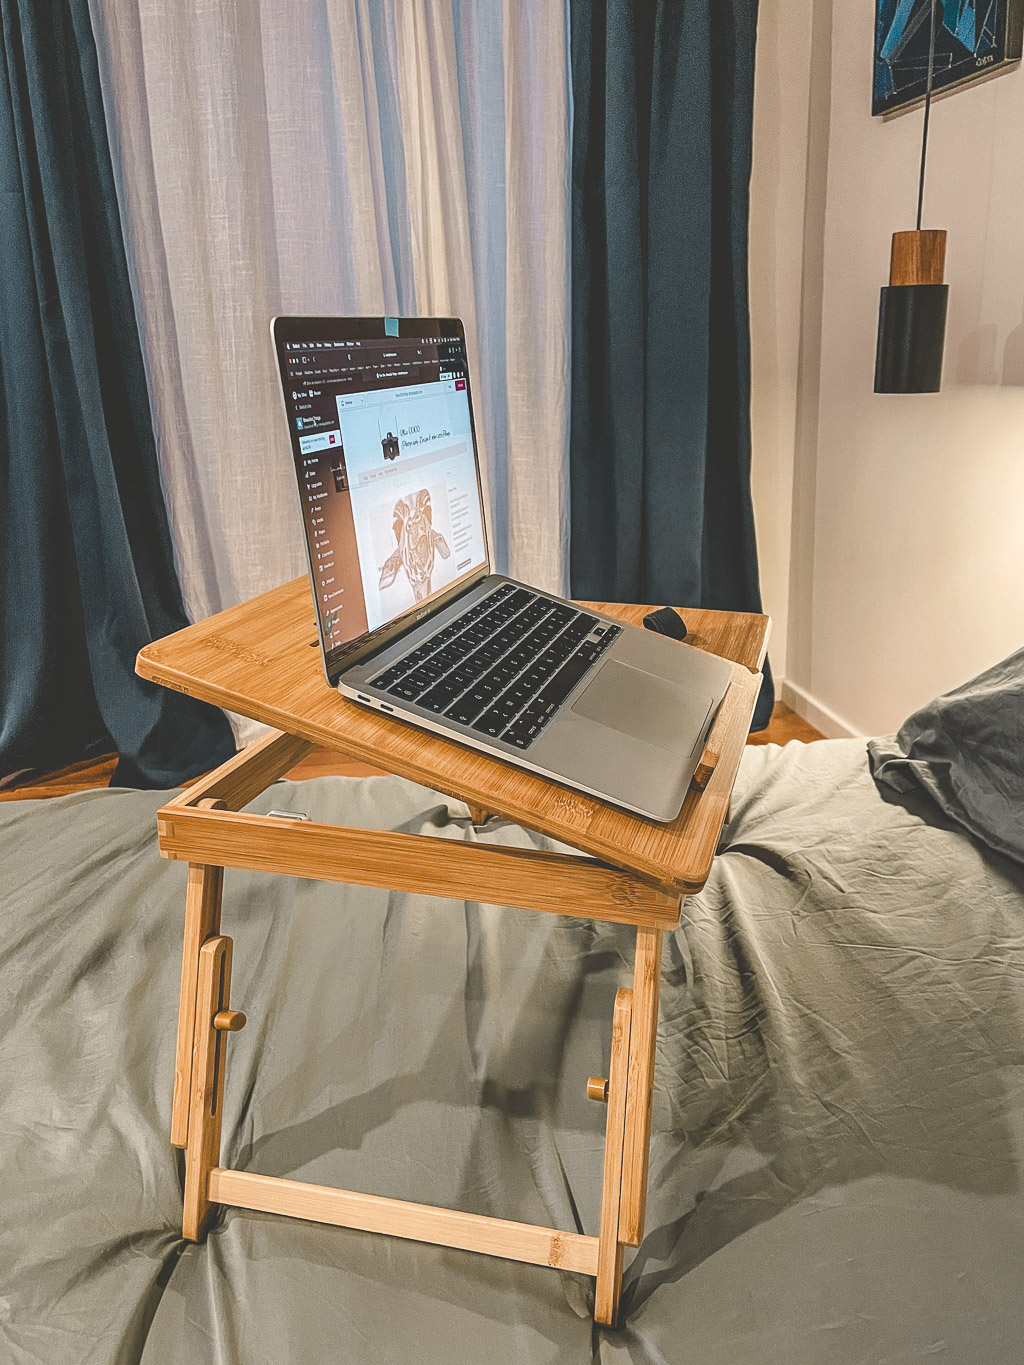 A lap desk to improve your posture